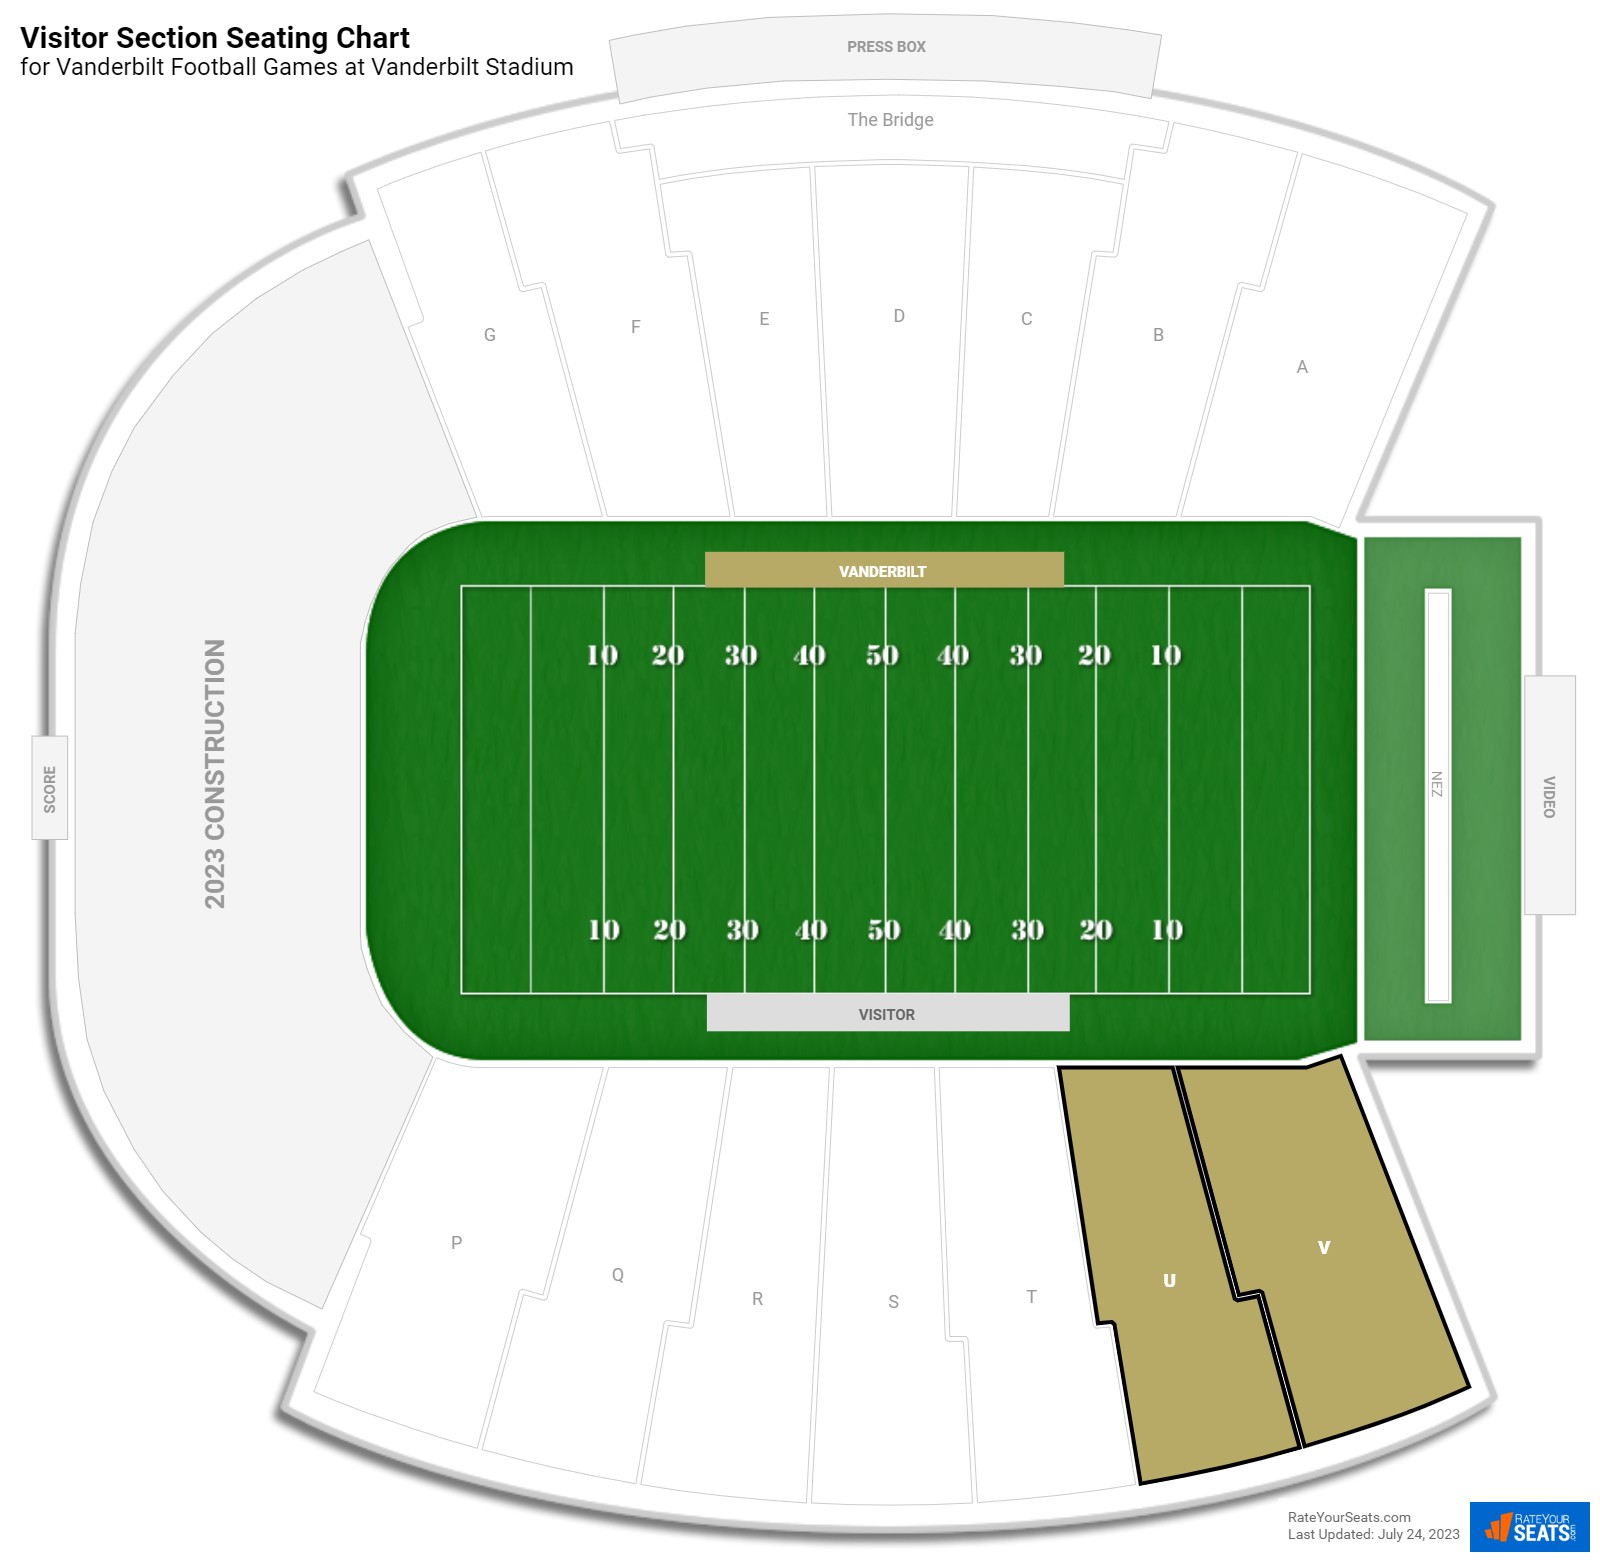 Vanderbilt Visitor Section Seating Chart at Vanderbilt Stadium